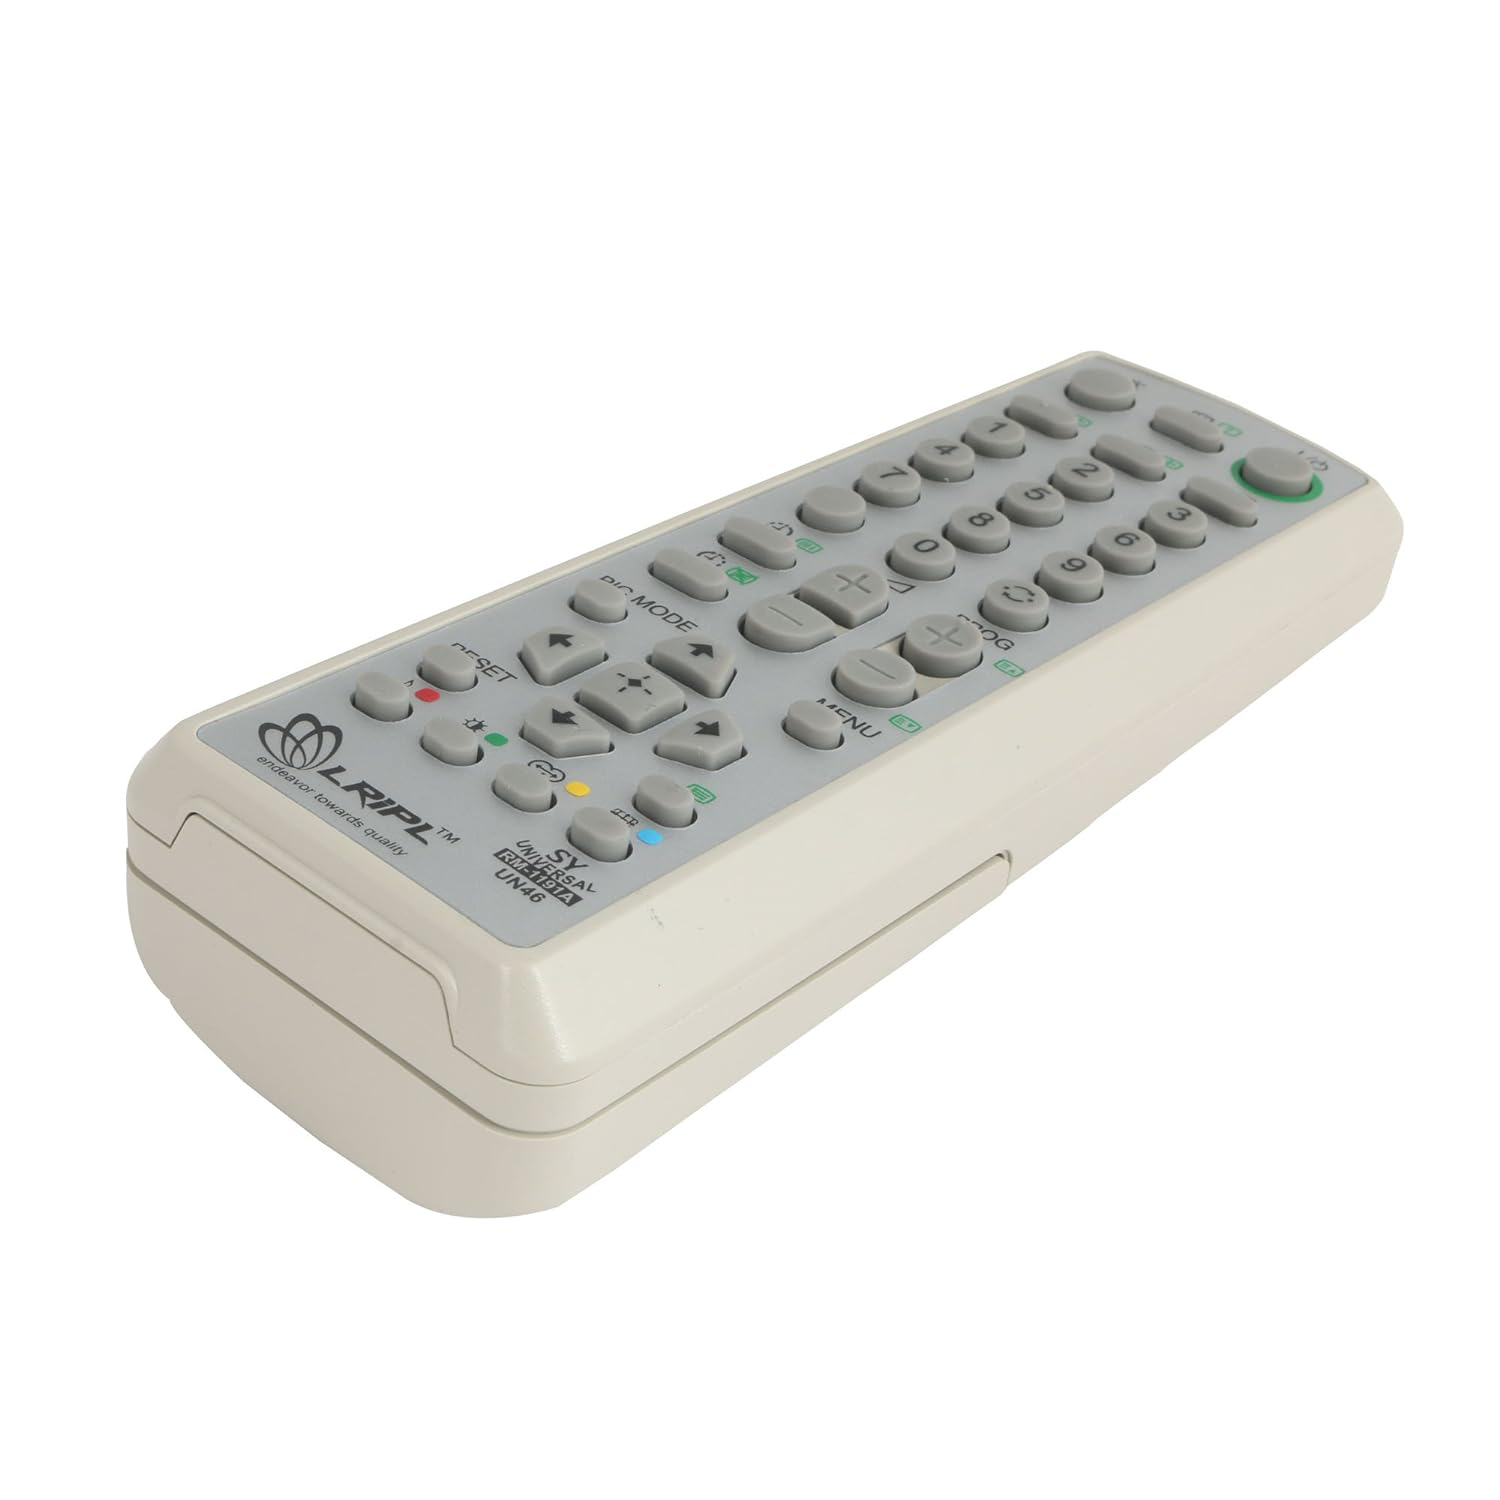 Lripl UN46 Universal REMOTE Compatible for Sony TV (Grey)